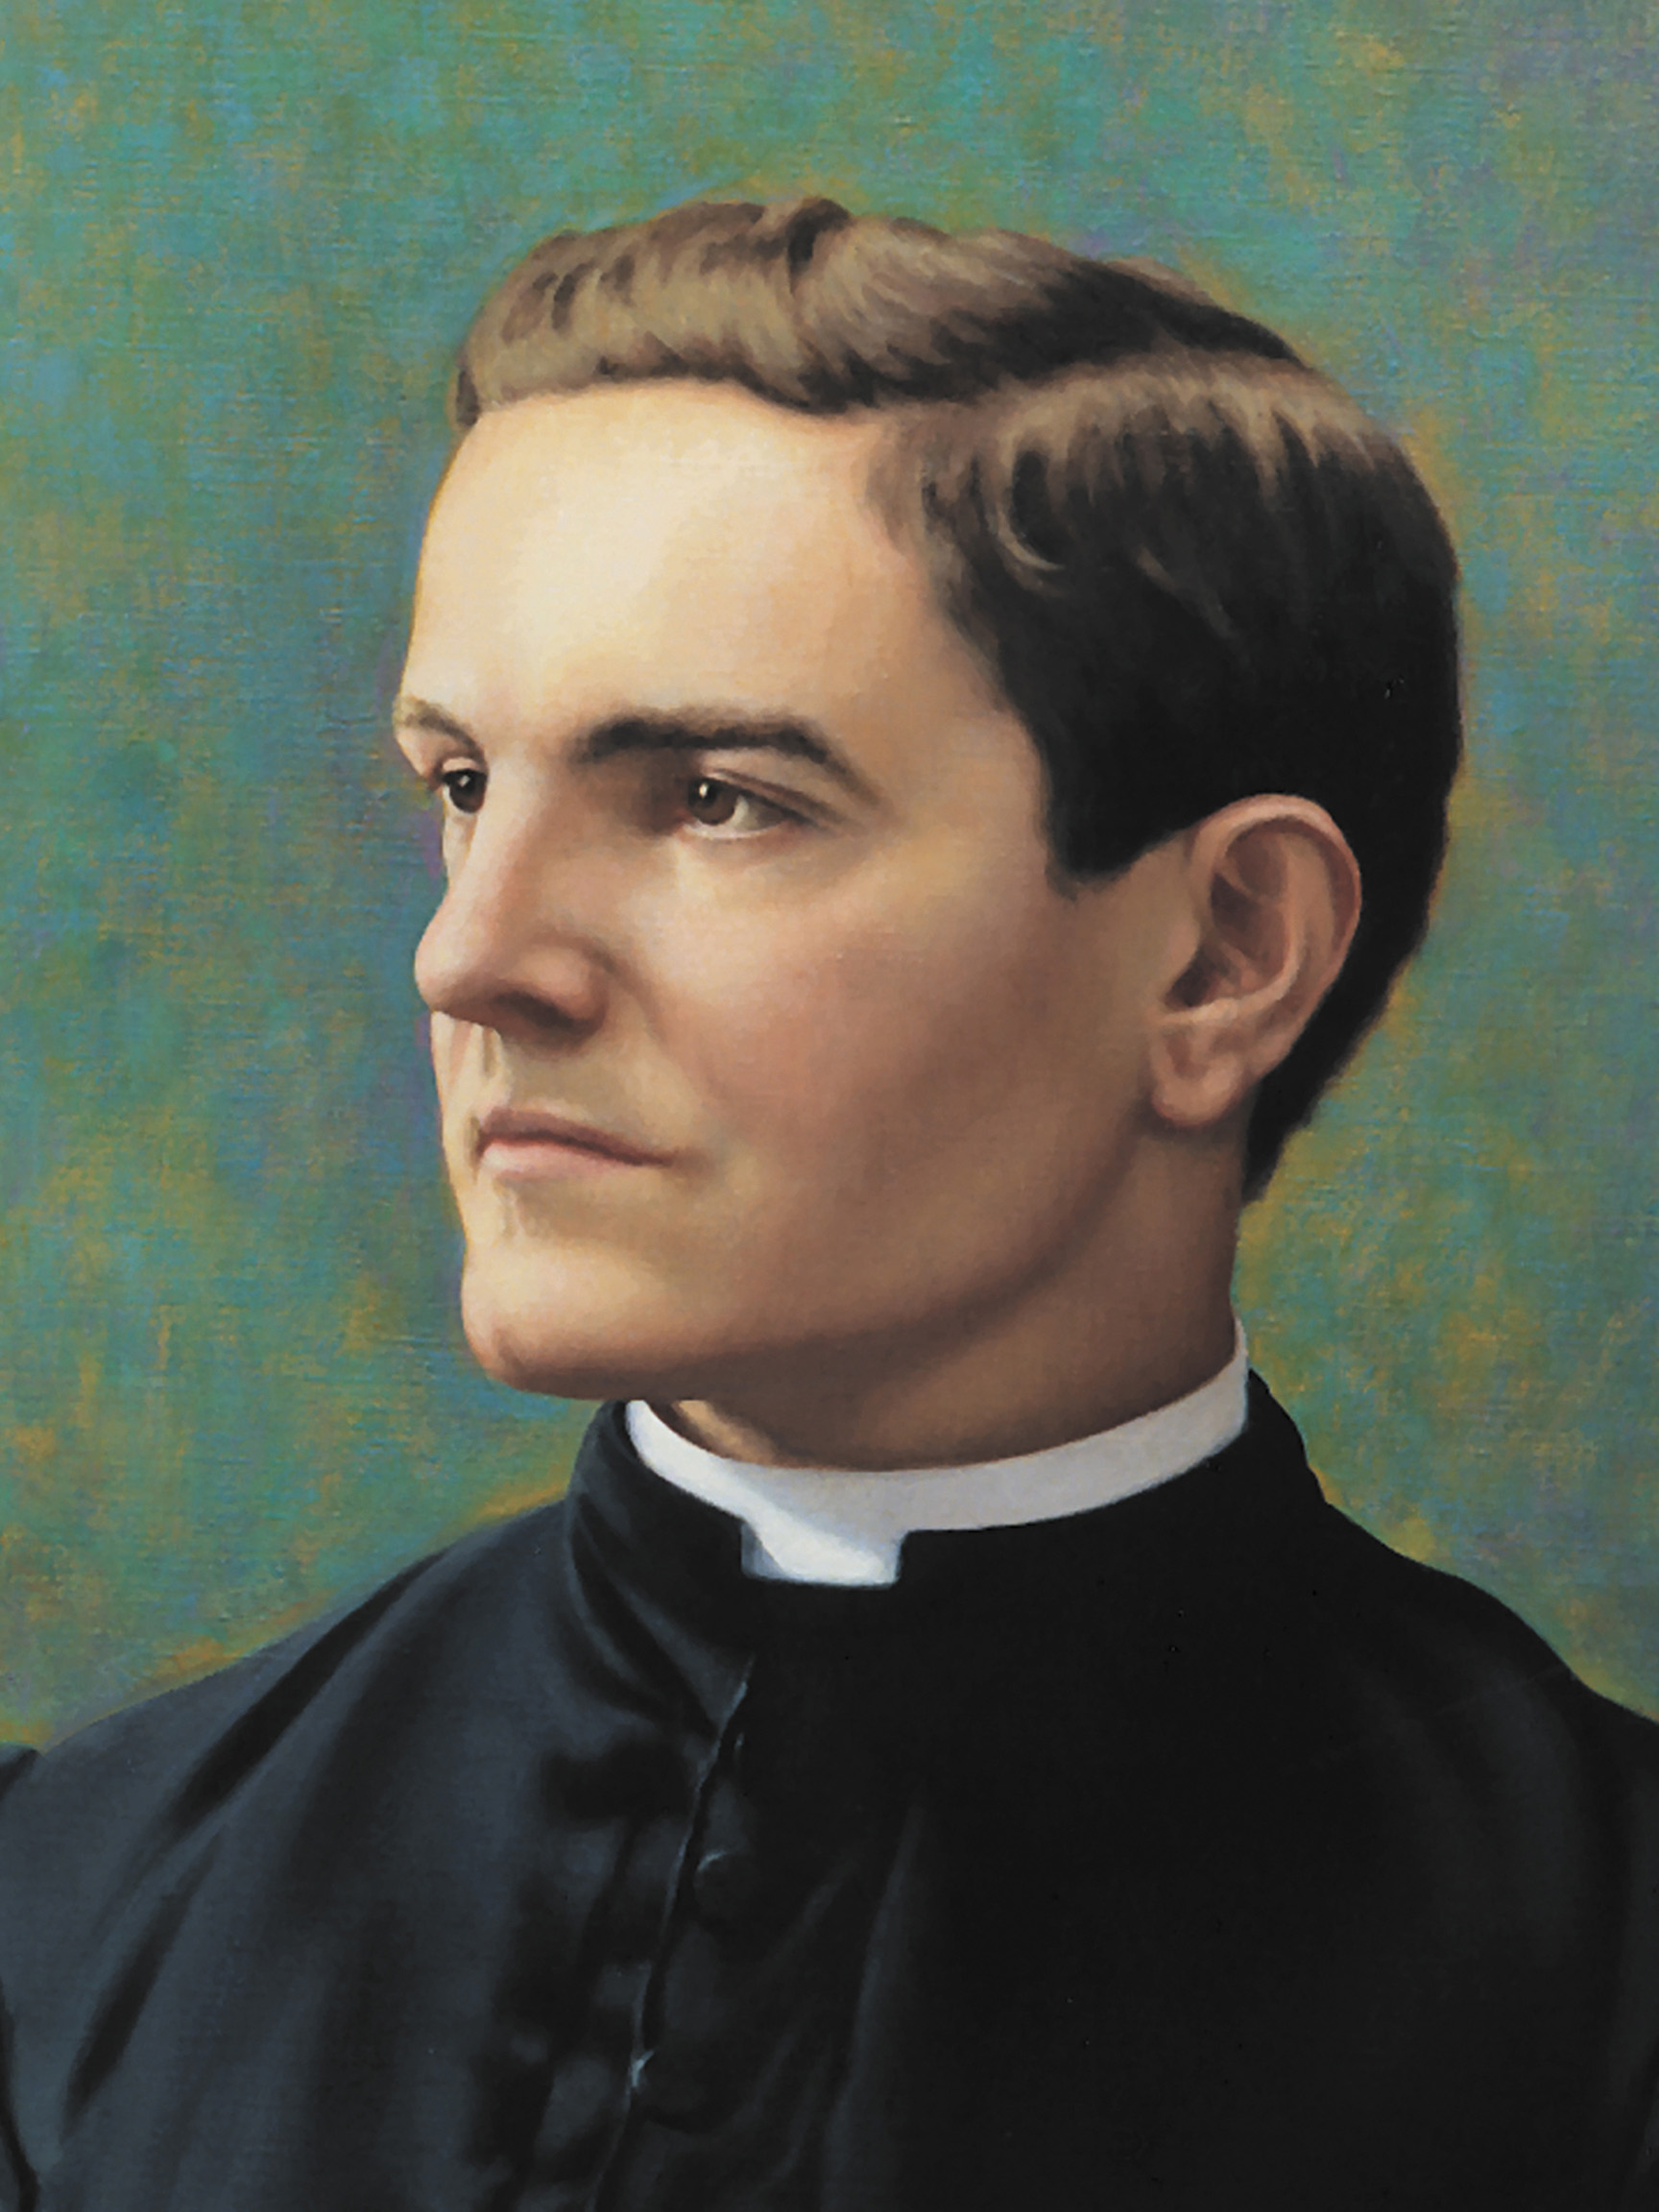 Venerable Fr. McGivney